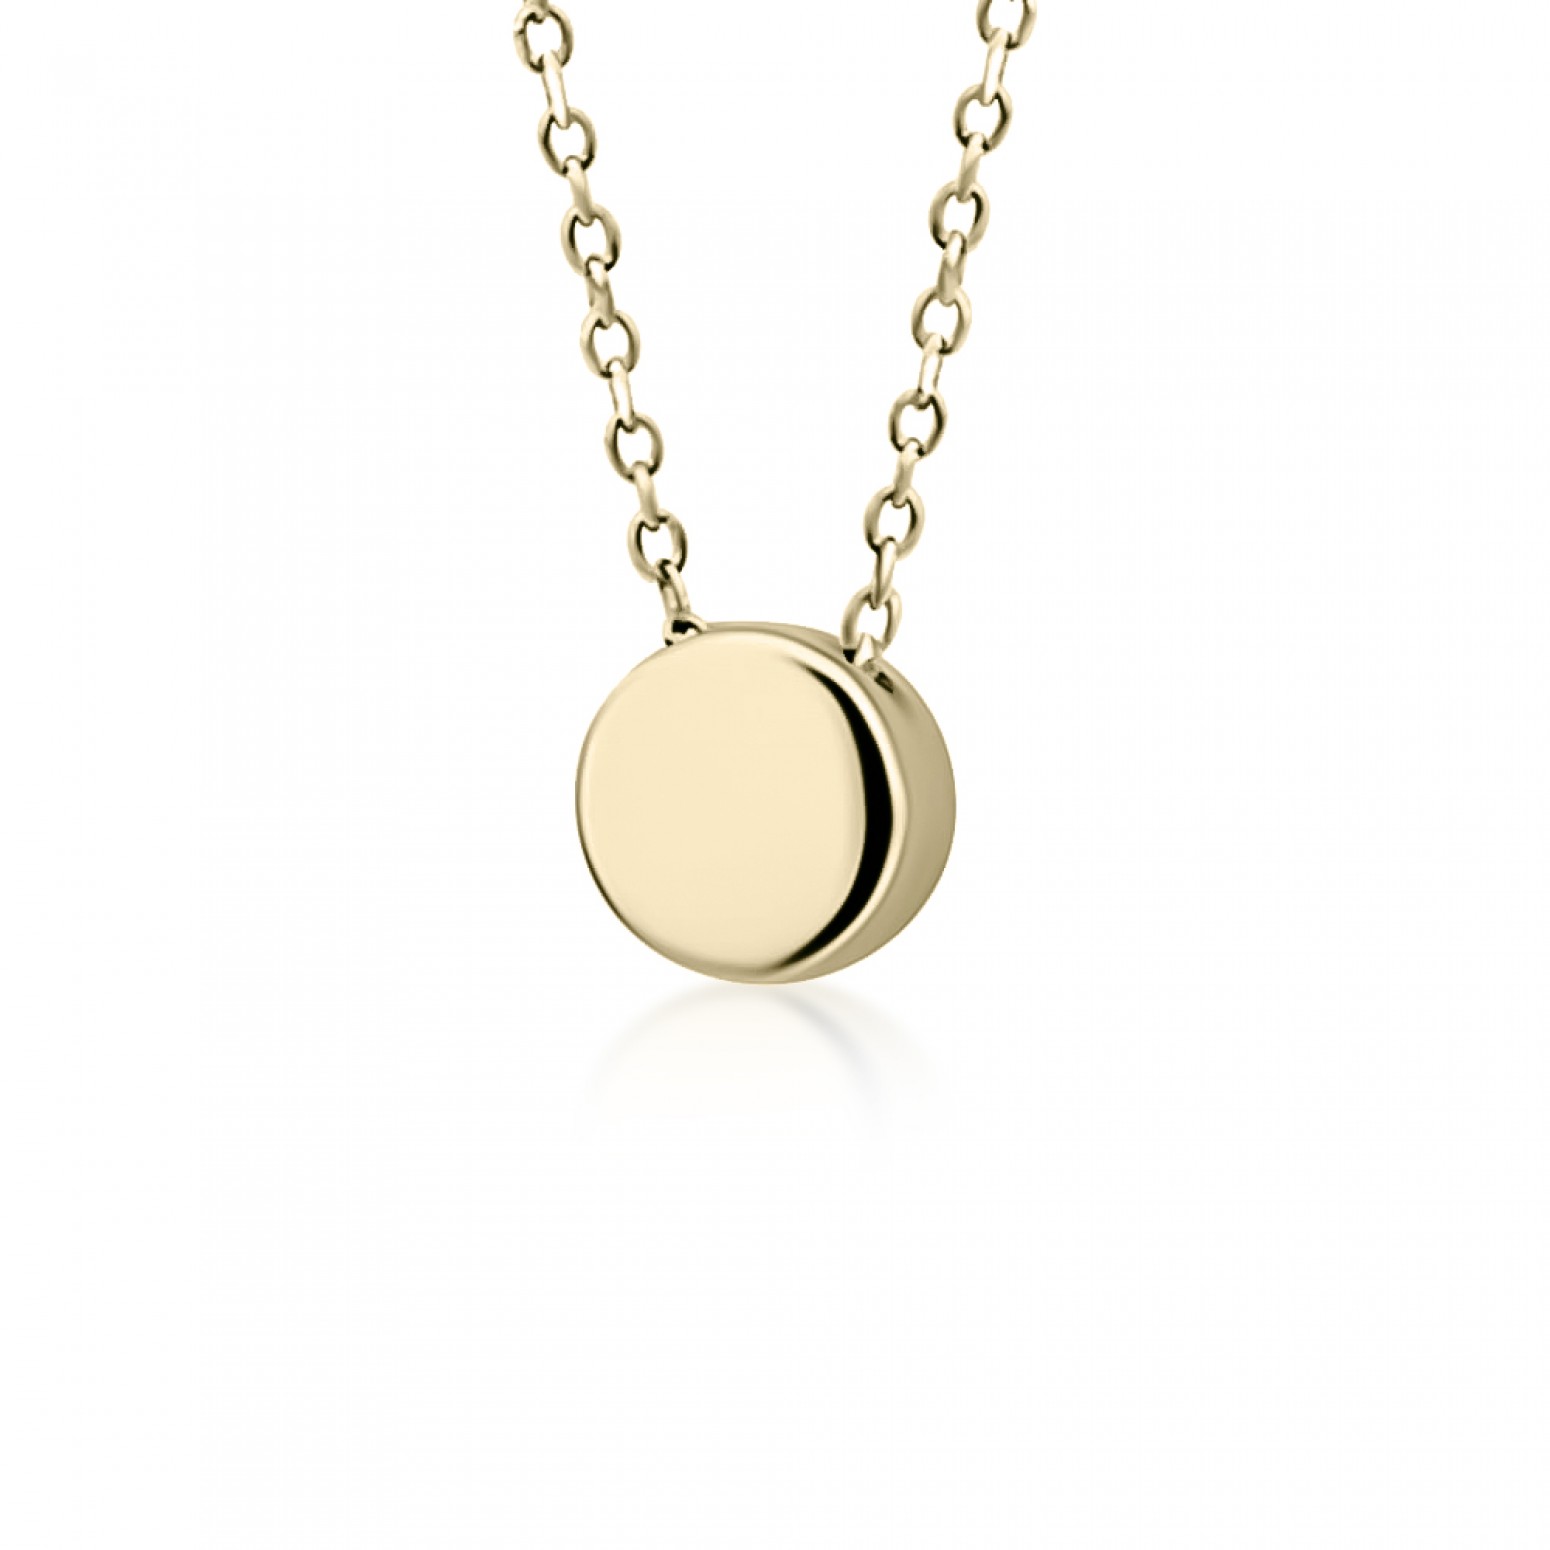 Round necklace, Κ9 gold, ko4492 NECKLACES Κοσμηματα - chrilia.gr